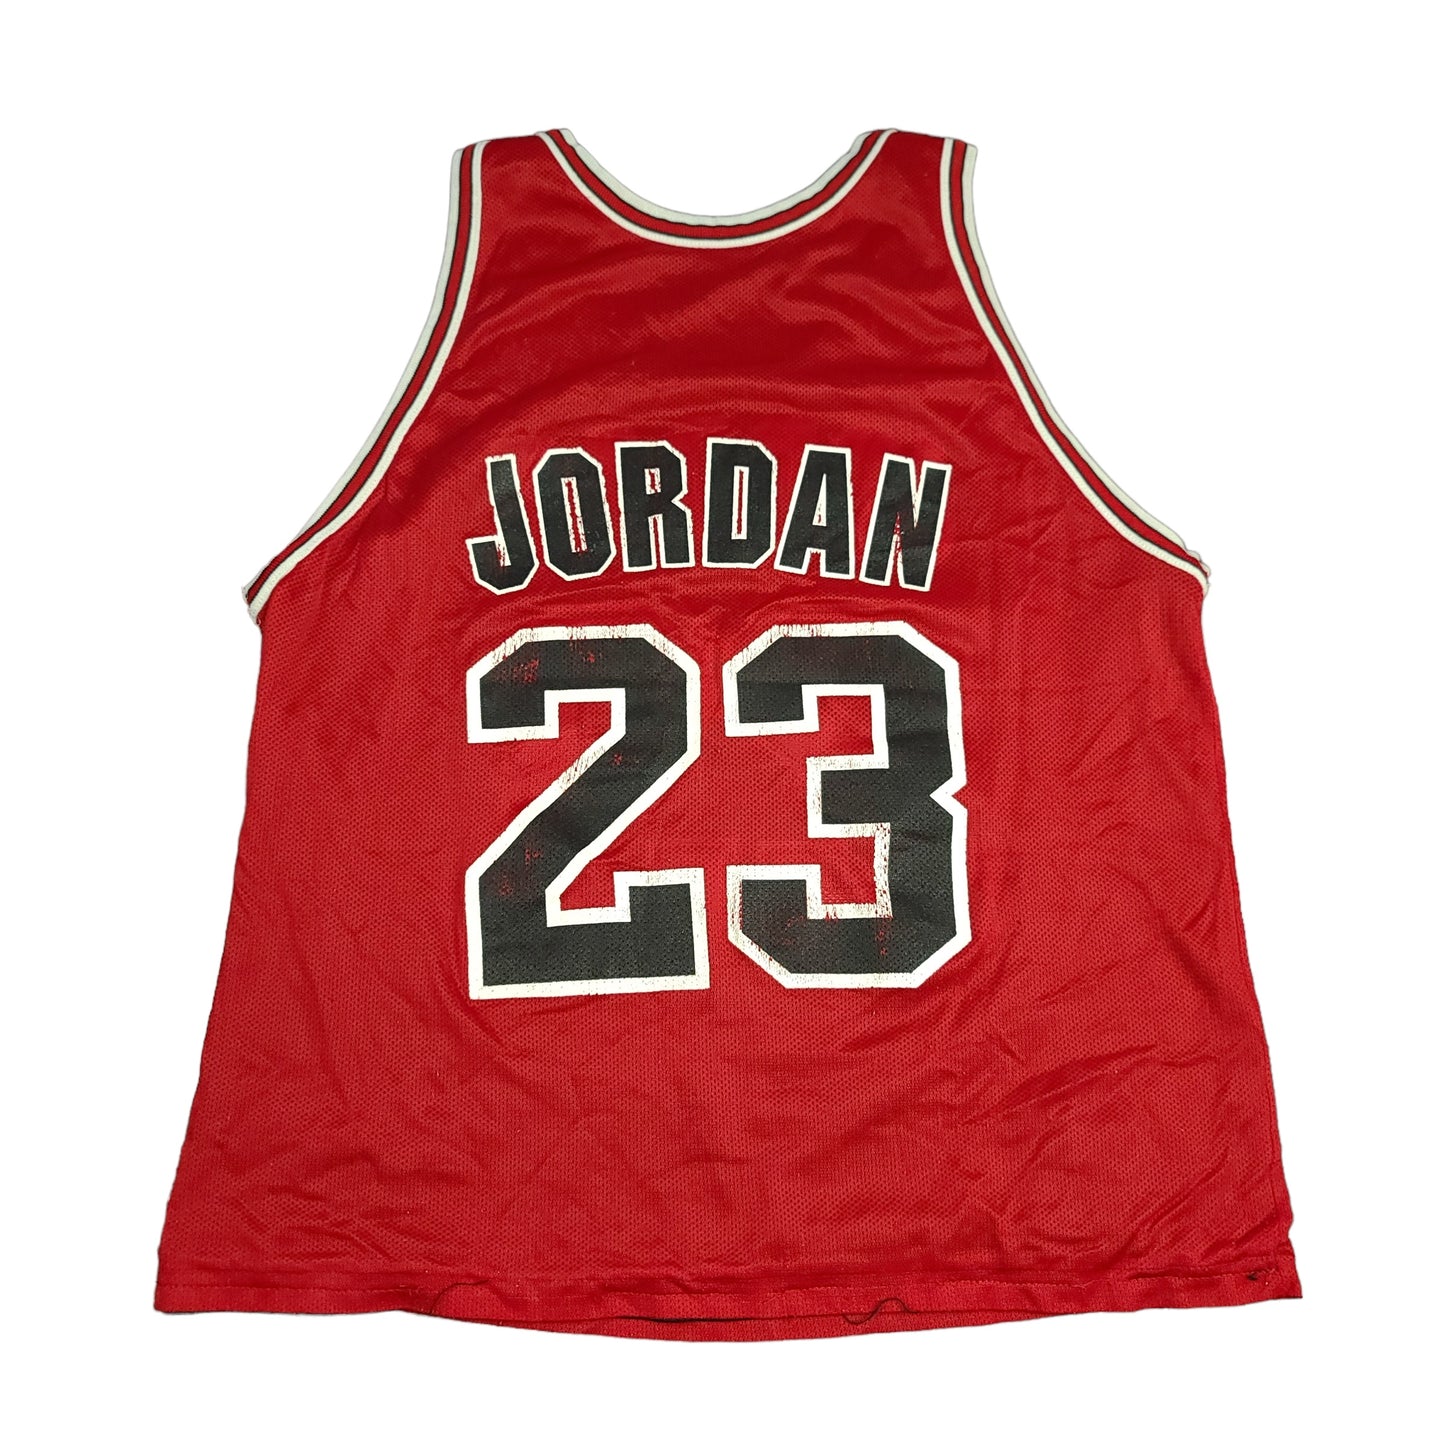 Vintage Michael Jordan Chicago Bulls Reversible Champion Jersey